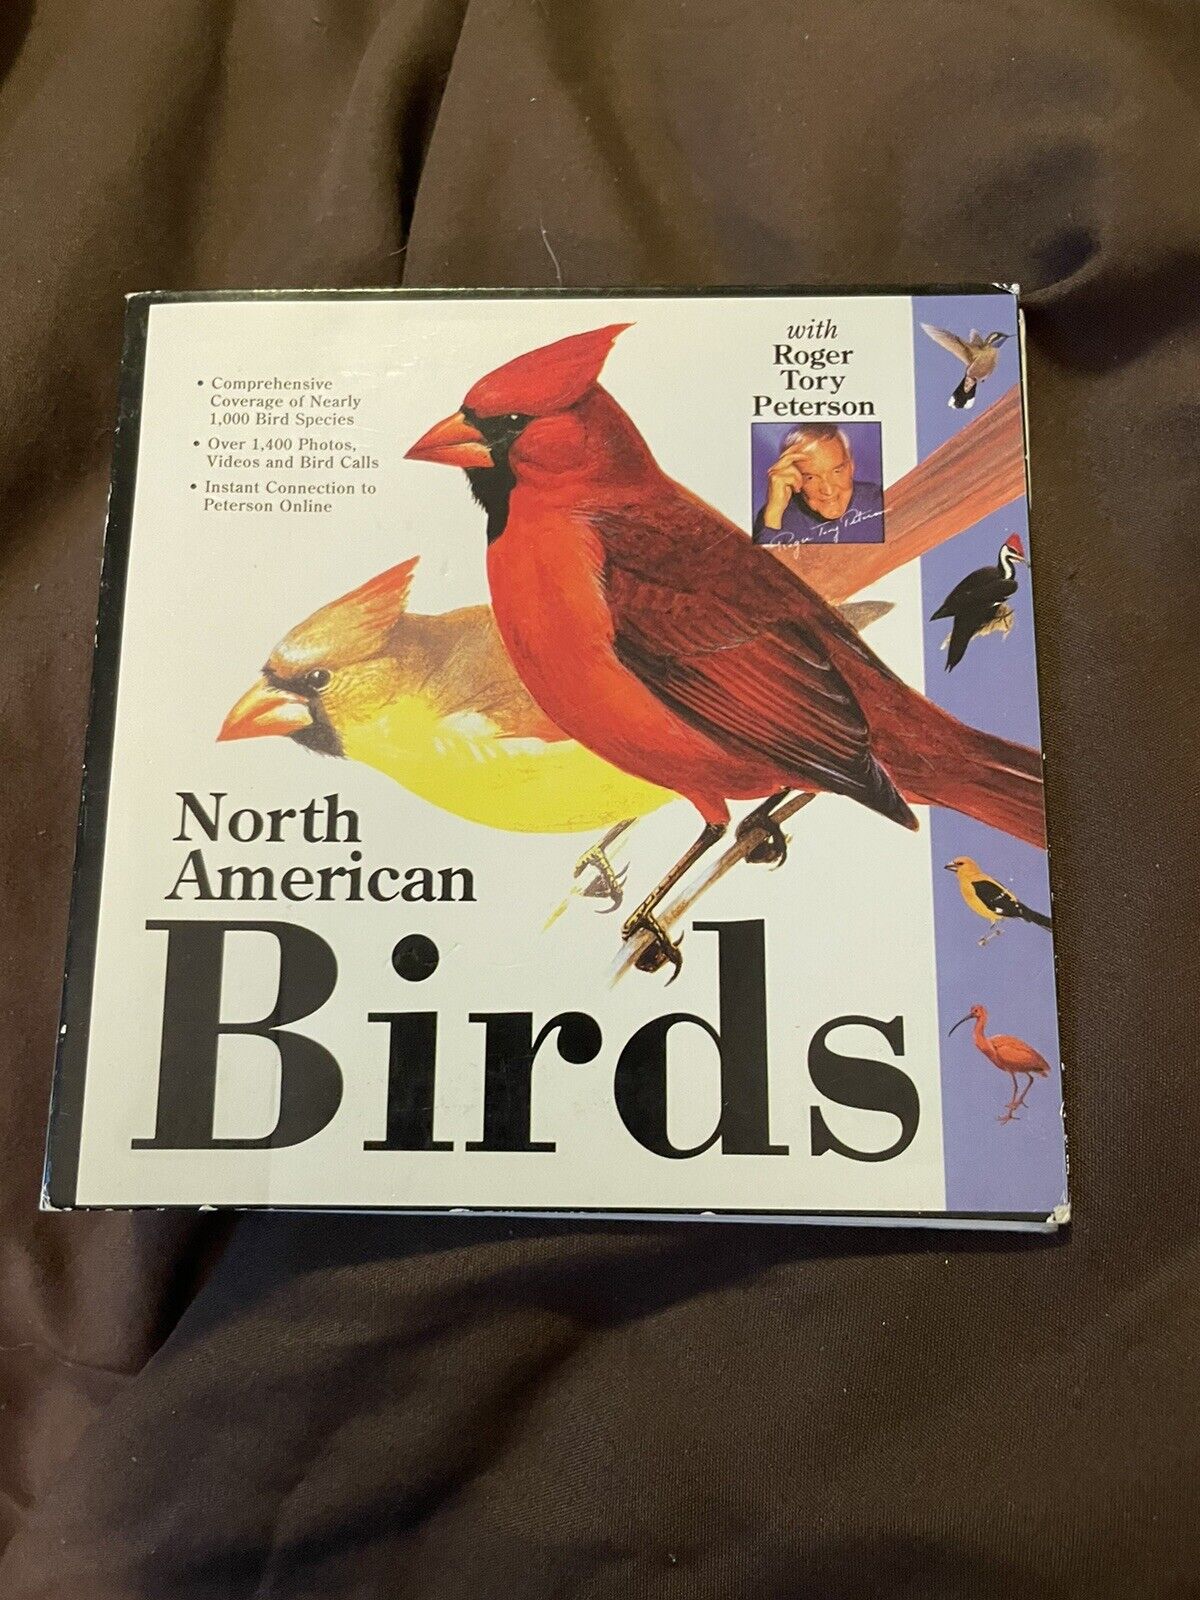 North American Birds (CD ROM) Windows 95/98 Peterson Multimedia Guides